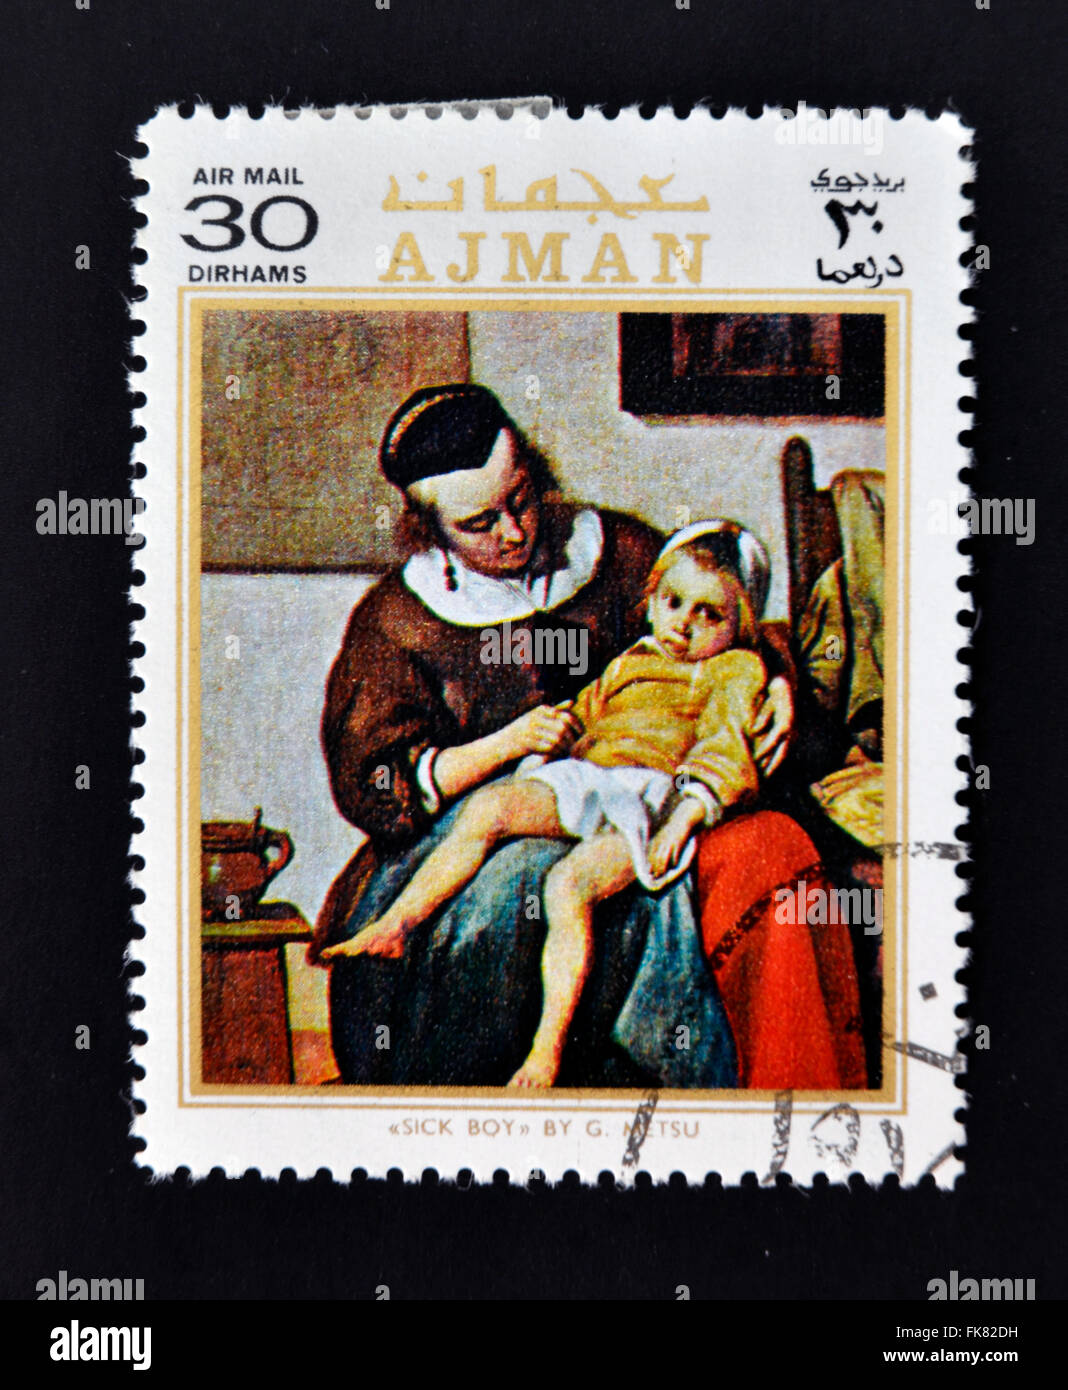 AJMAN - CIRCA 1970: A stamp printed in Ajman shows sick boy by Metsu, circa 1970 Stock Photo